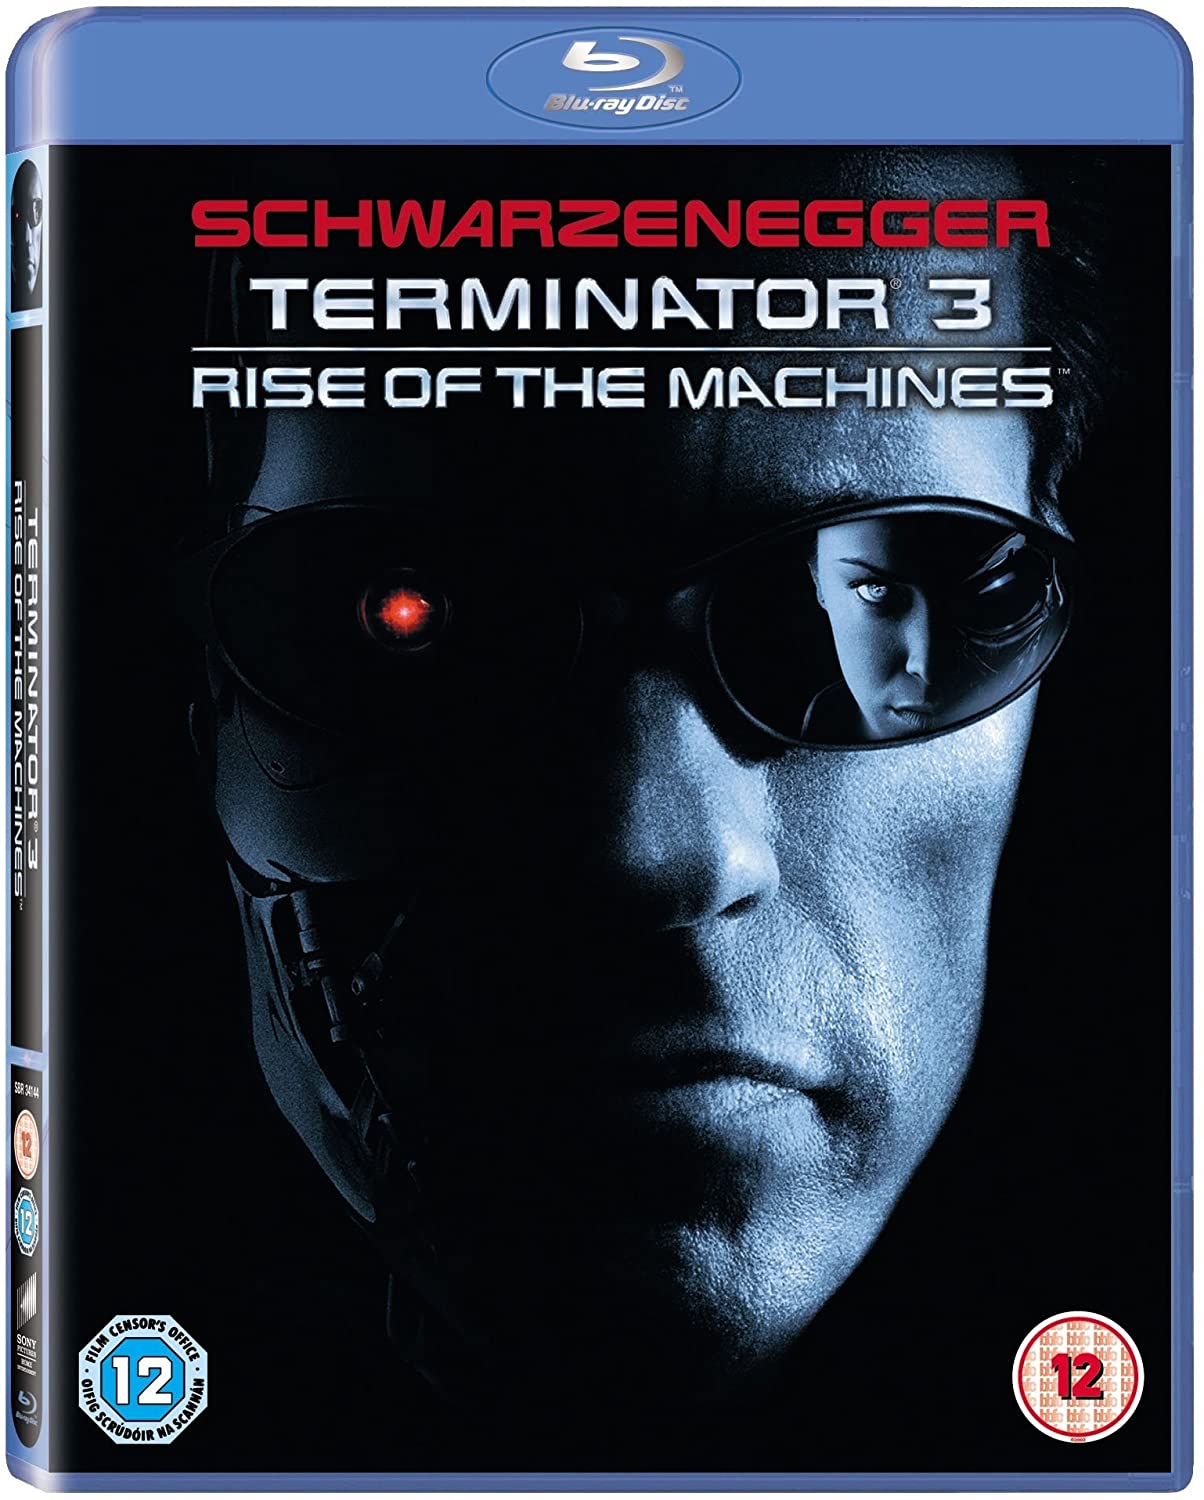 Stiahni si Filmy CZ/SK dabing Terminator 3 - Rise of the Machines - Vzpoura stroju (2003)(BluRay)(1080p)(CZ/SK/EN) = CSFD 74%